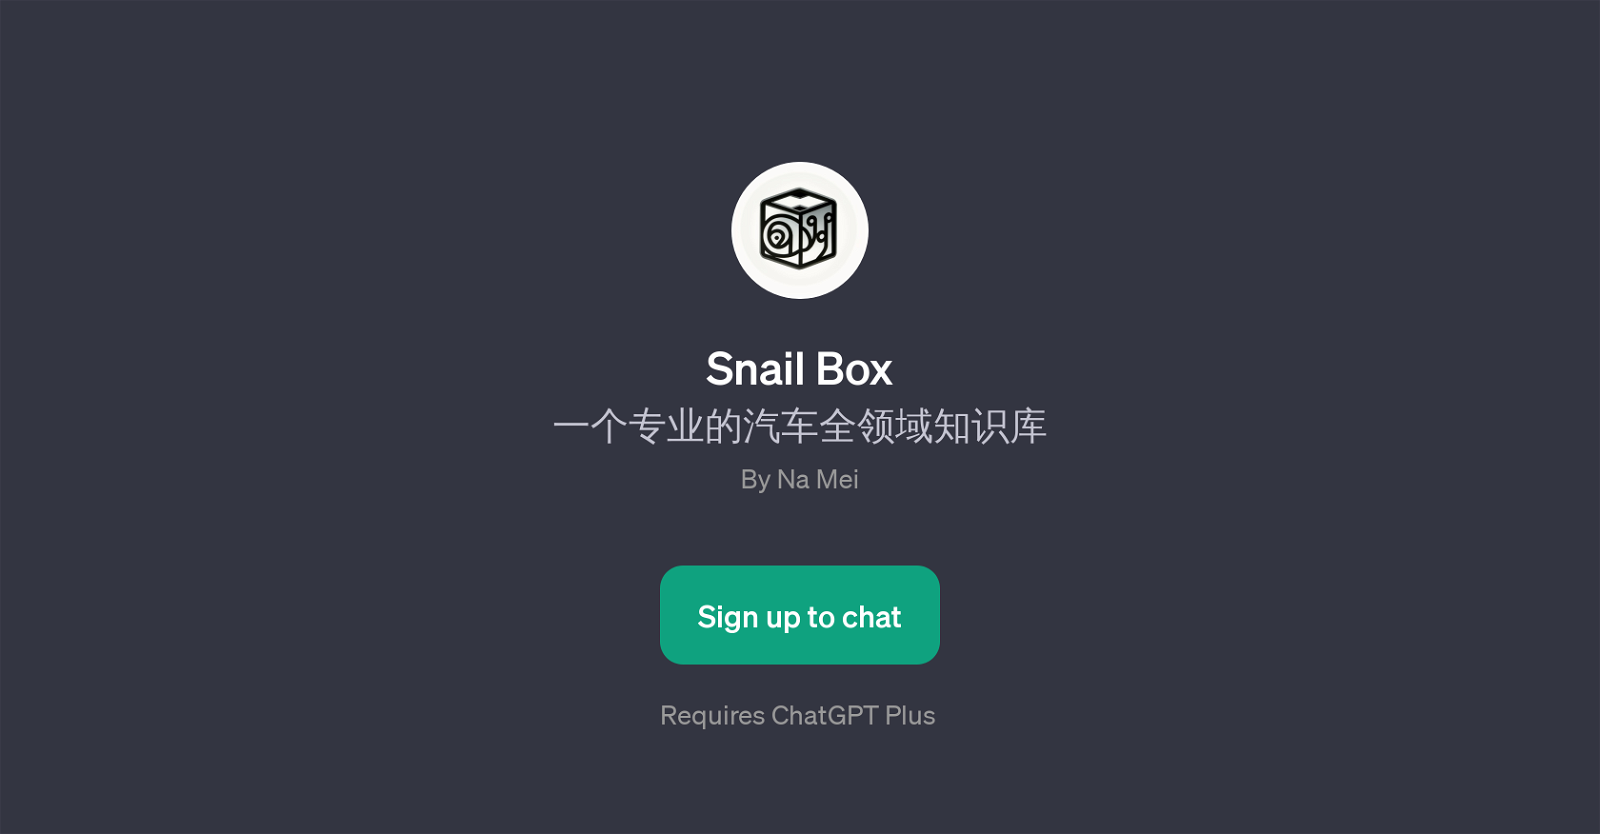 Snail Box website